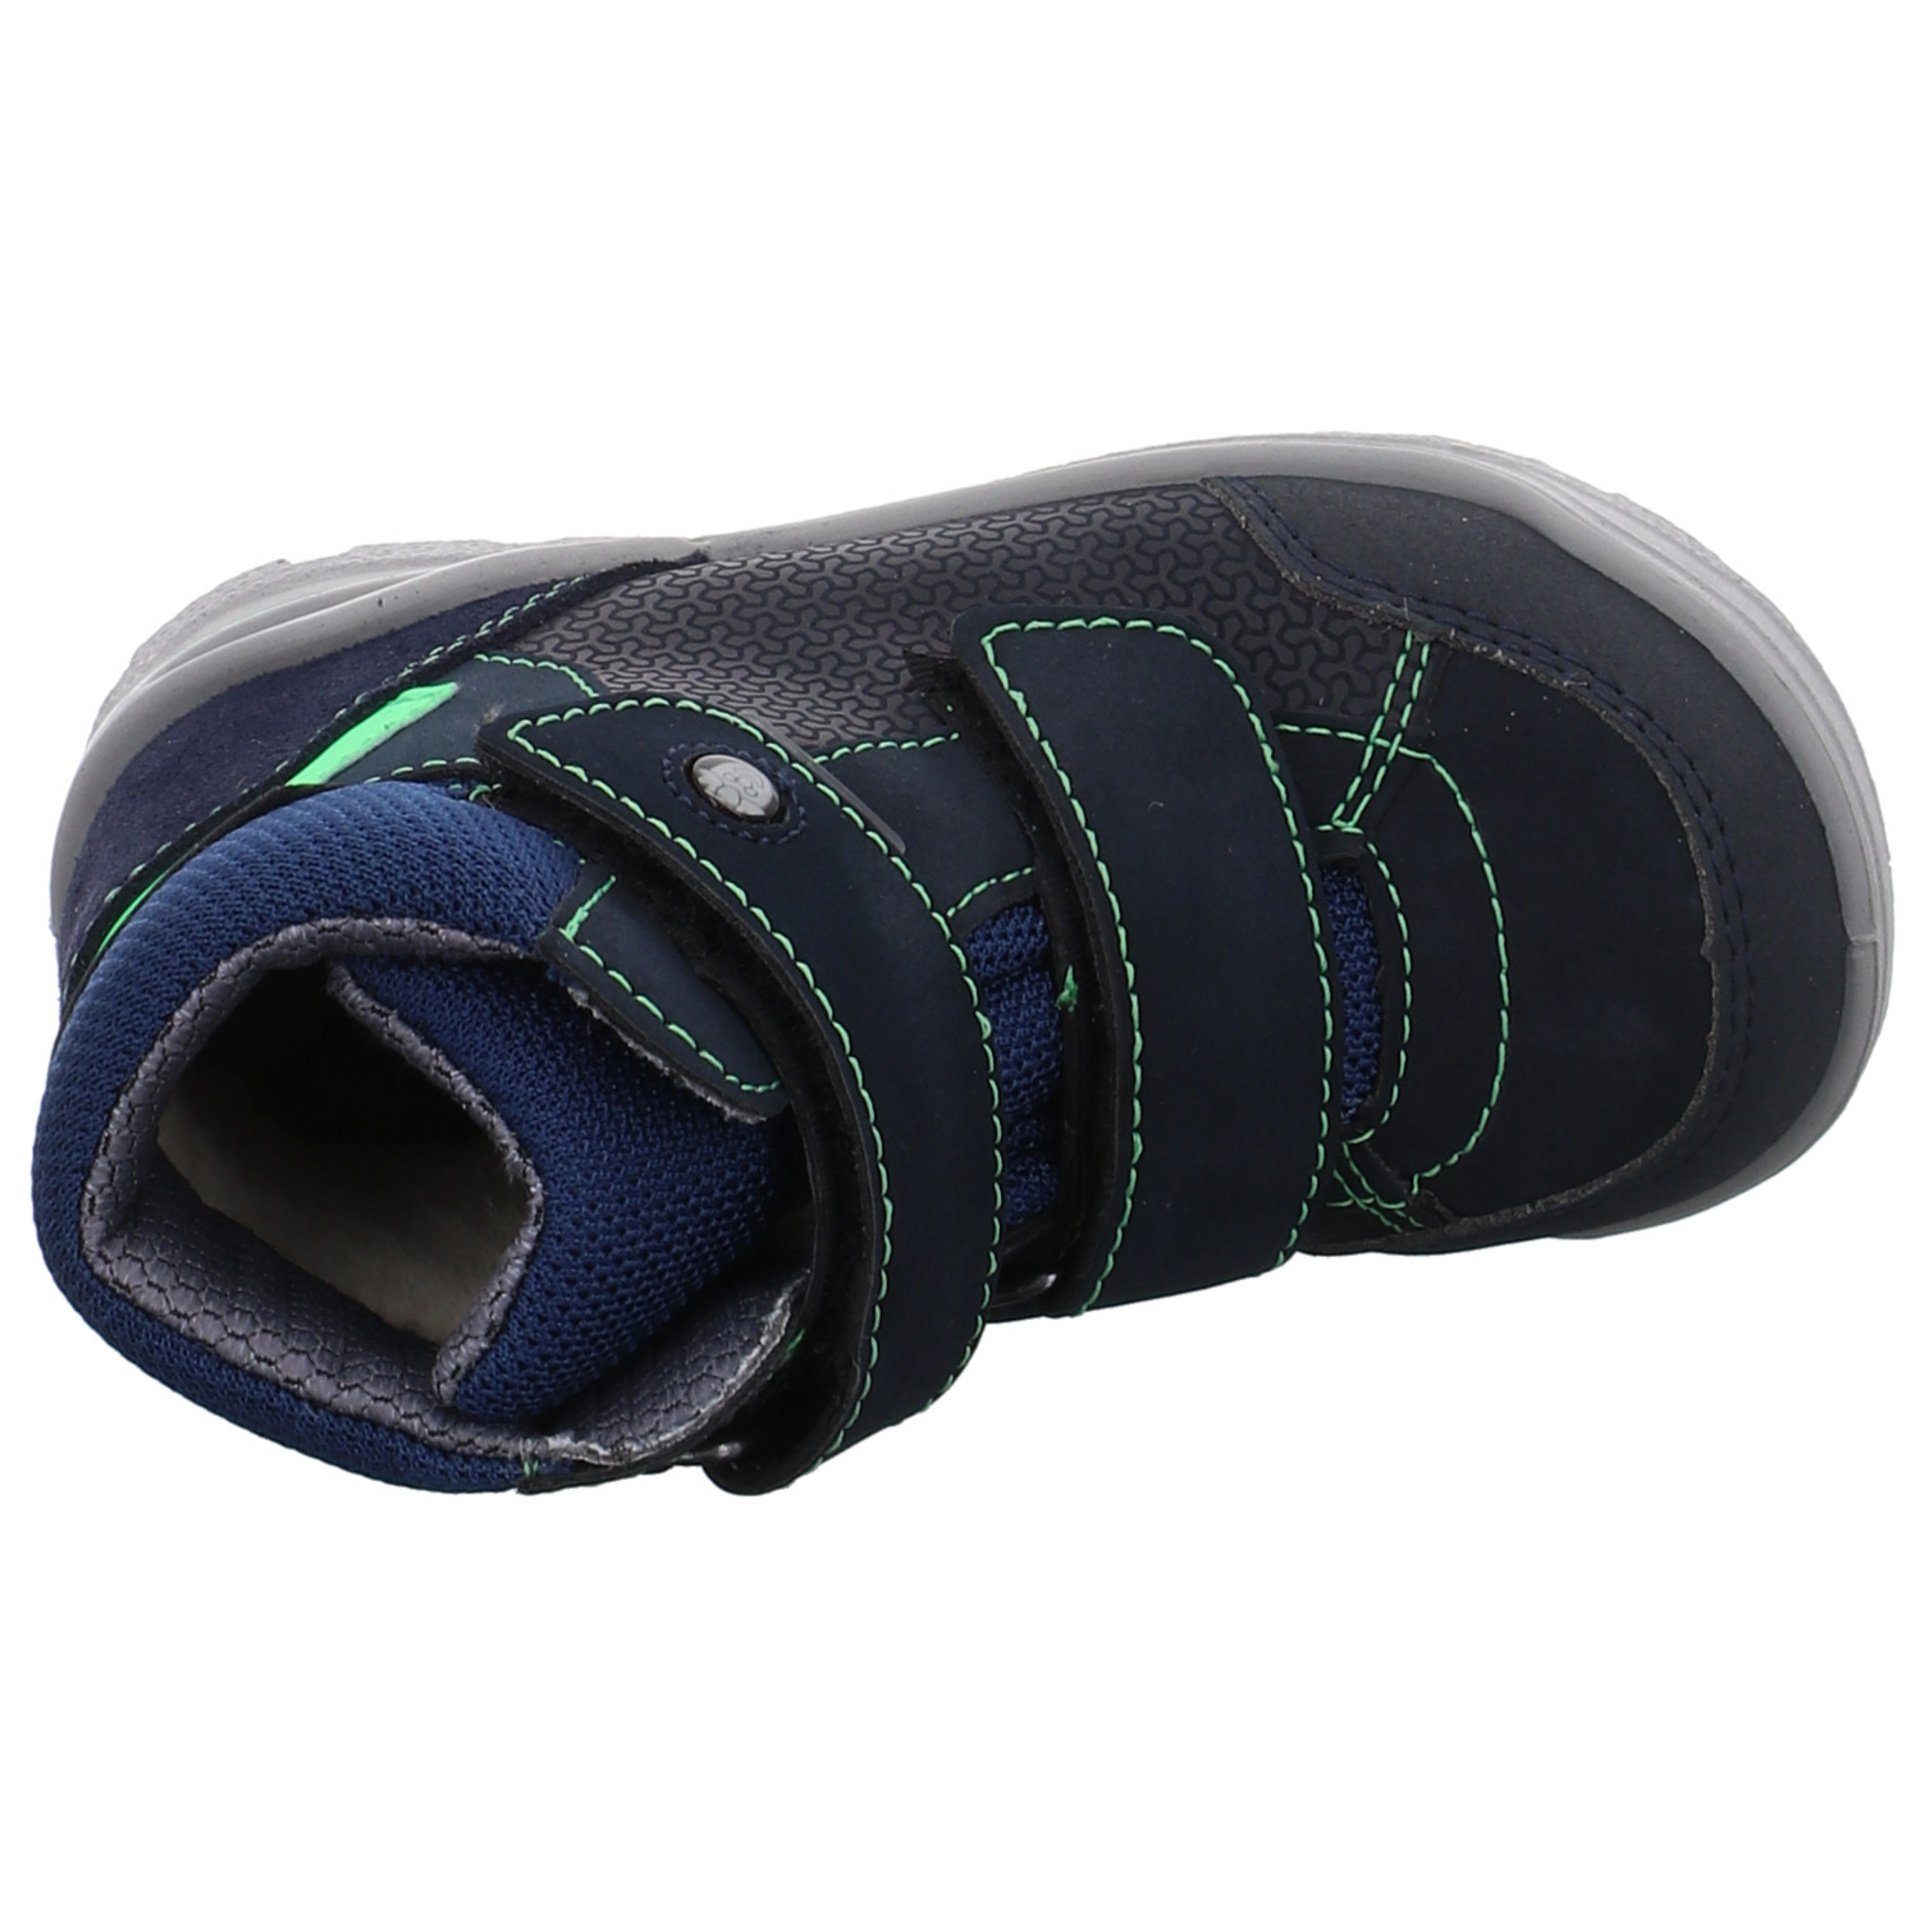 Kombi Ricosta blau uni sonst Leder-/Textilkombination Finn Boots Leder-/Textilkombination Winterboots